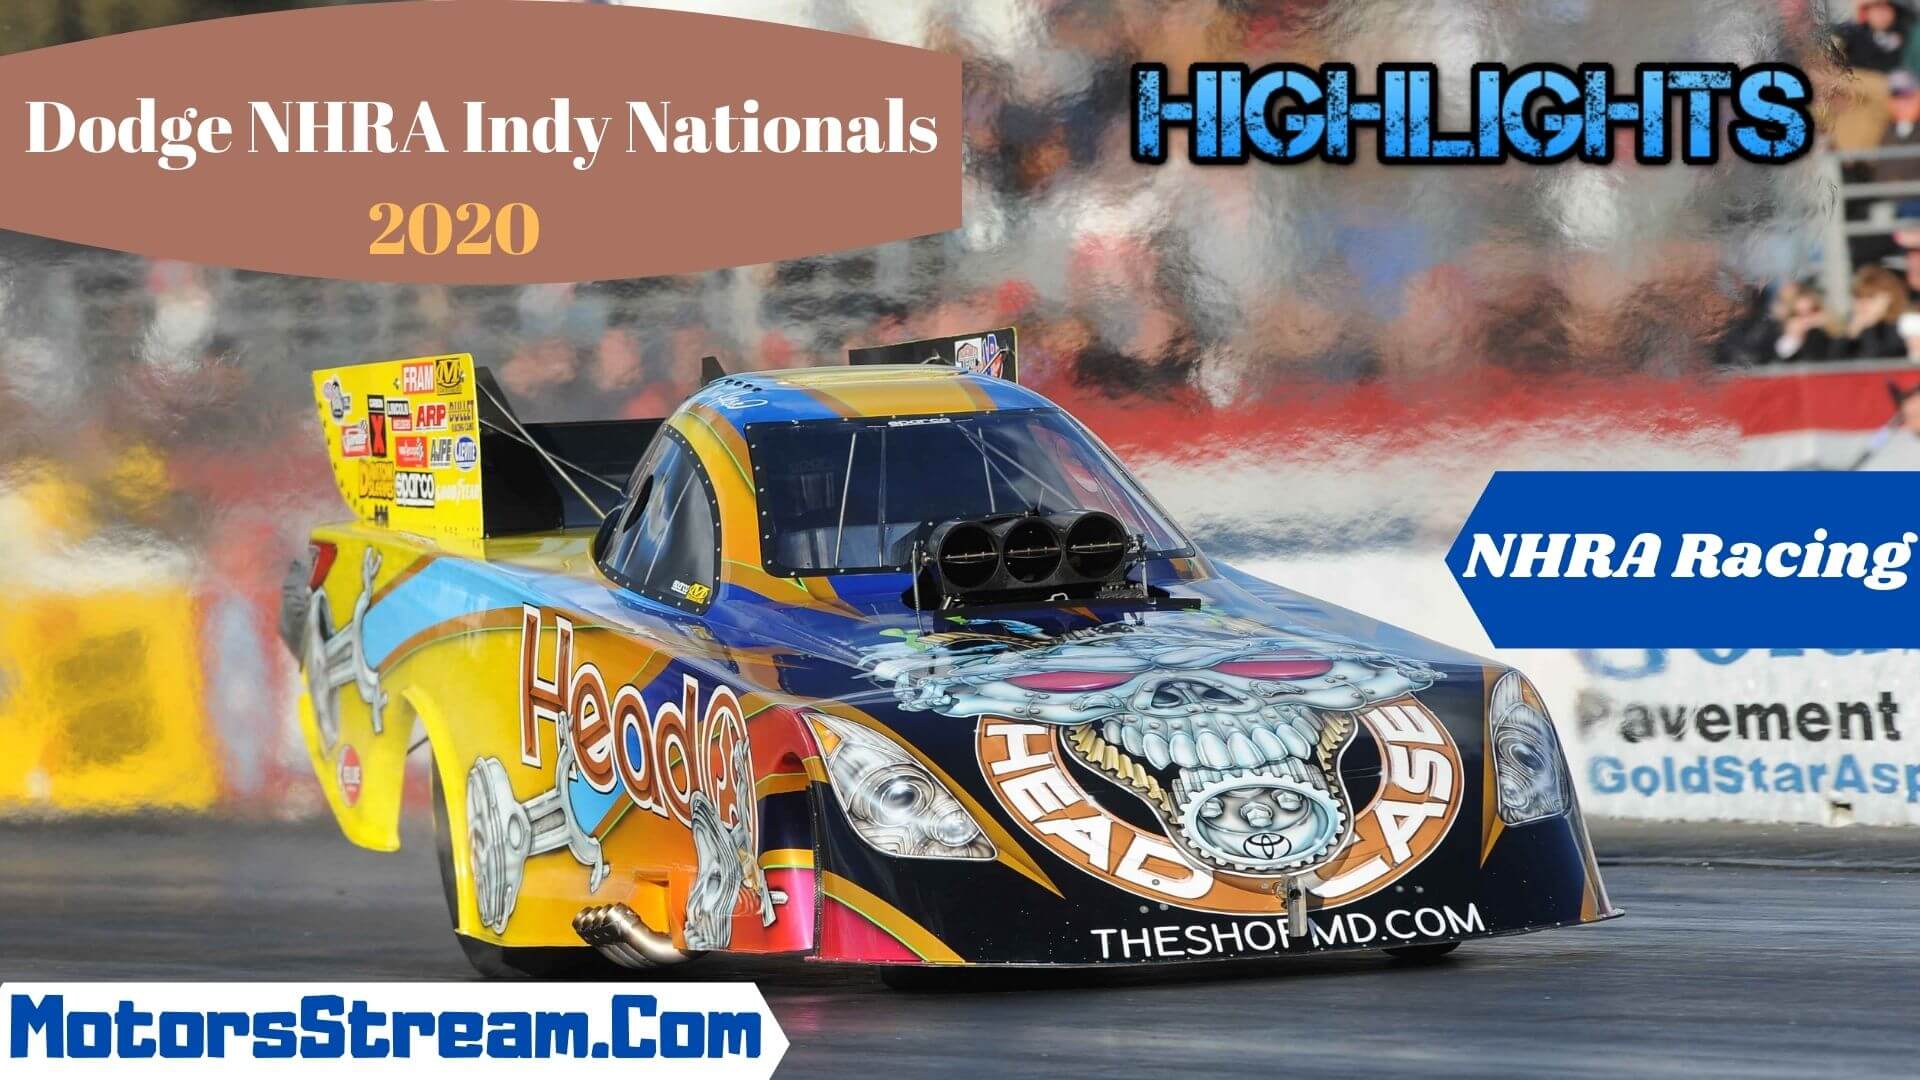 Dodge NHRA Indy Nationals Highlights 2020 NHRA Racing